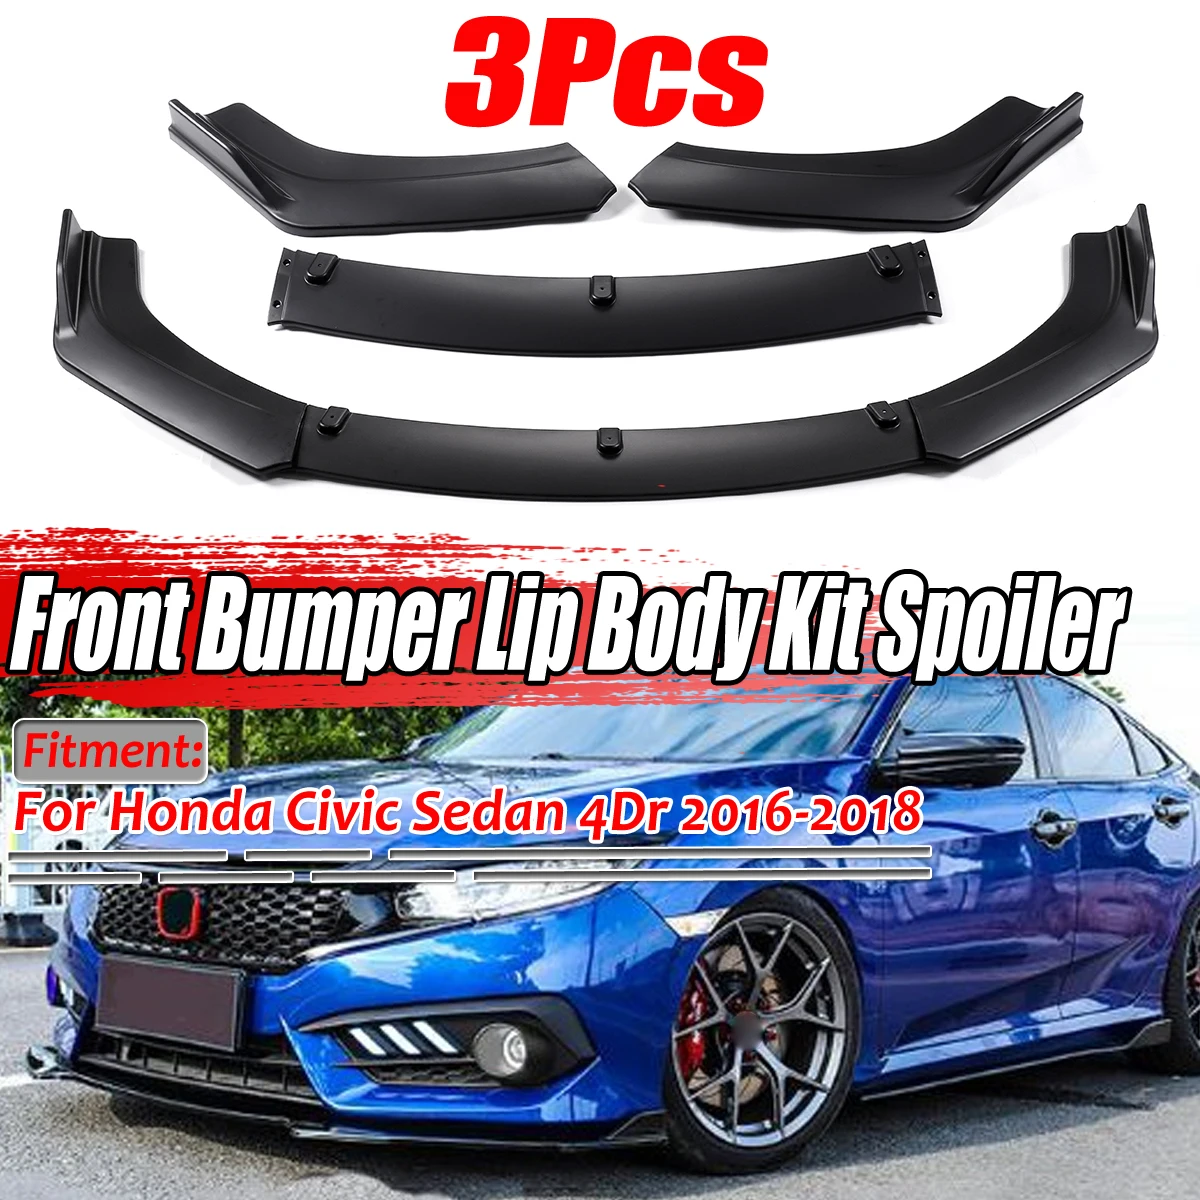 3pcs Universal Car Front Lower Bumper Lip Spoiler Body Kit For Honda For Civic Sedan 4Dr 2016-2018 Carbon Fiber Look / Black